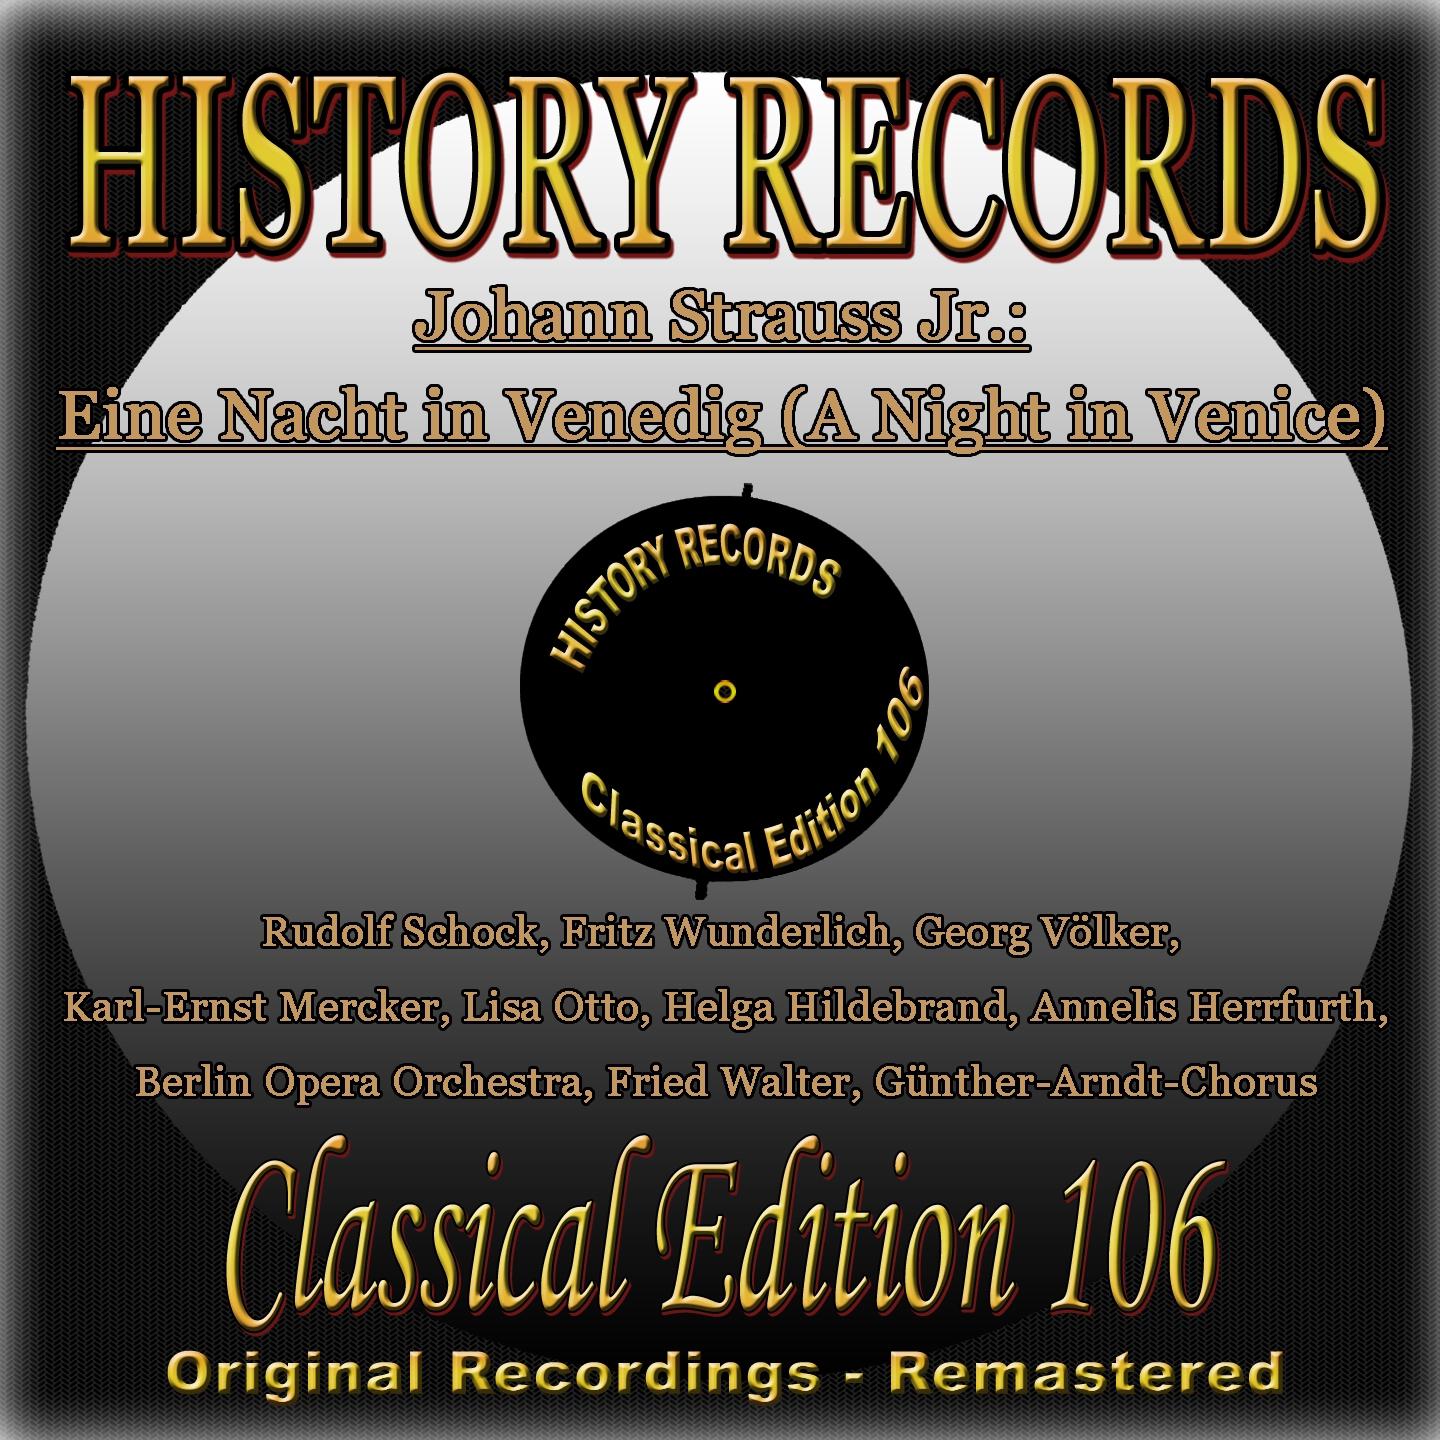 Постер альбома Johann Strauss II: Eine Nacht in Venedig (A Night in Venice) Excerpts (History Records - Classical Edition 106 -  Original Recordings - Remastered)